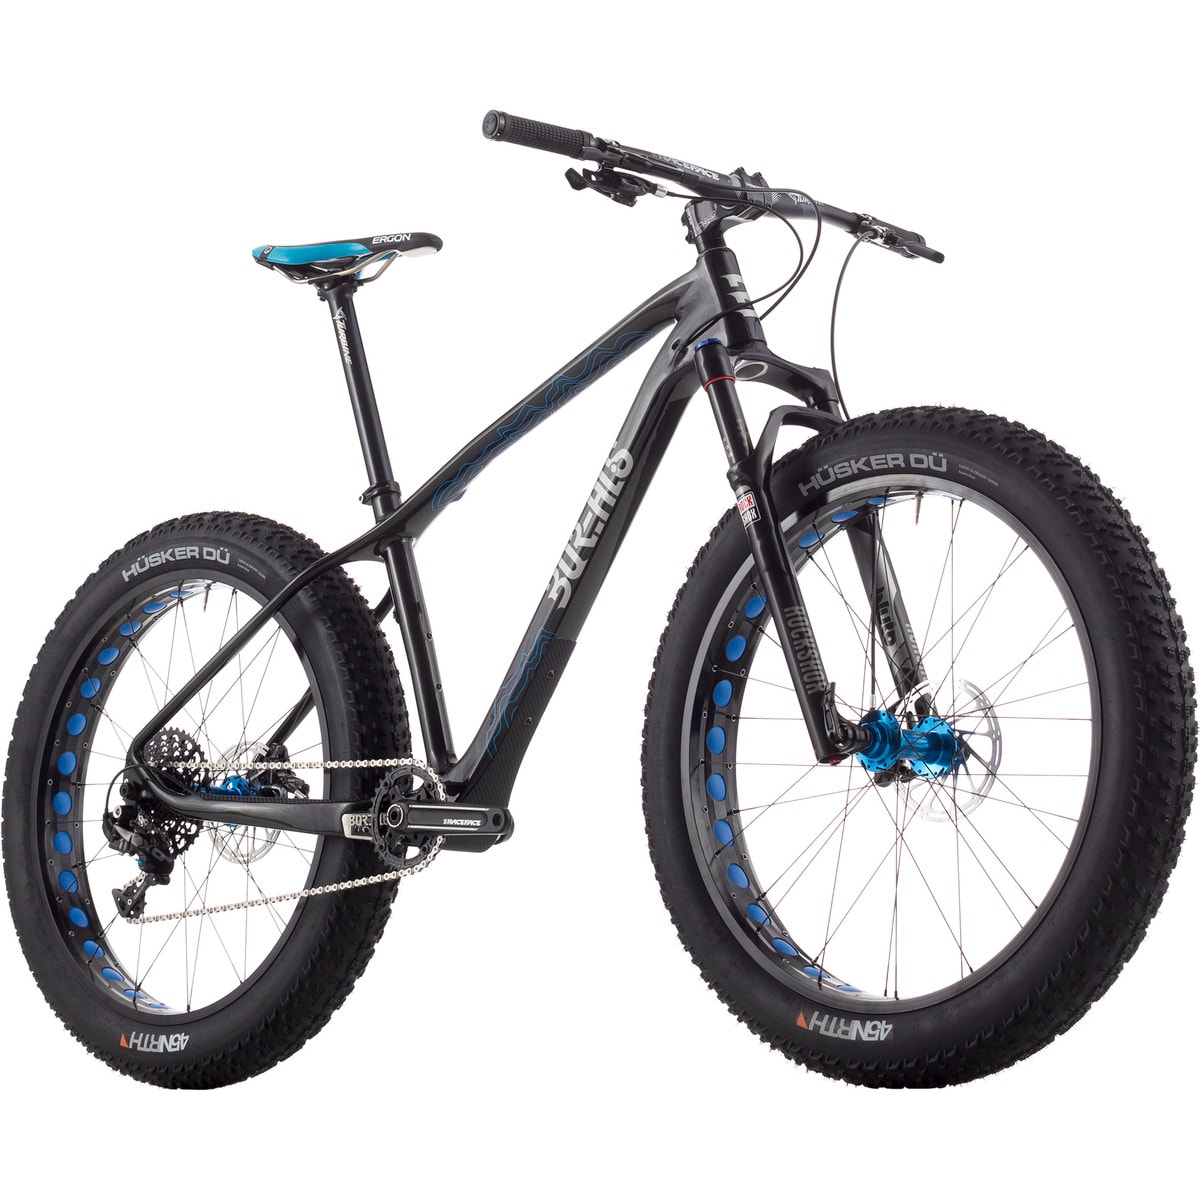 Borealis Bikes Echo X01 Complete Fat Bike 2016